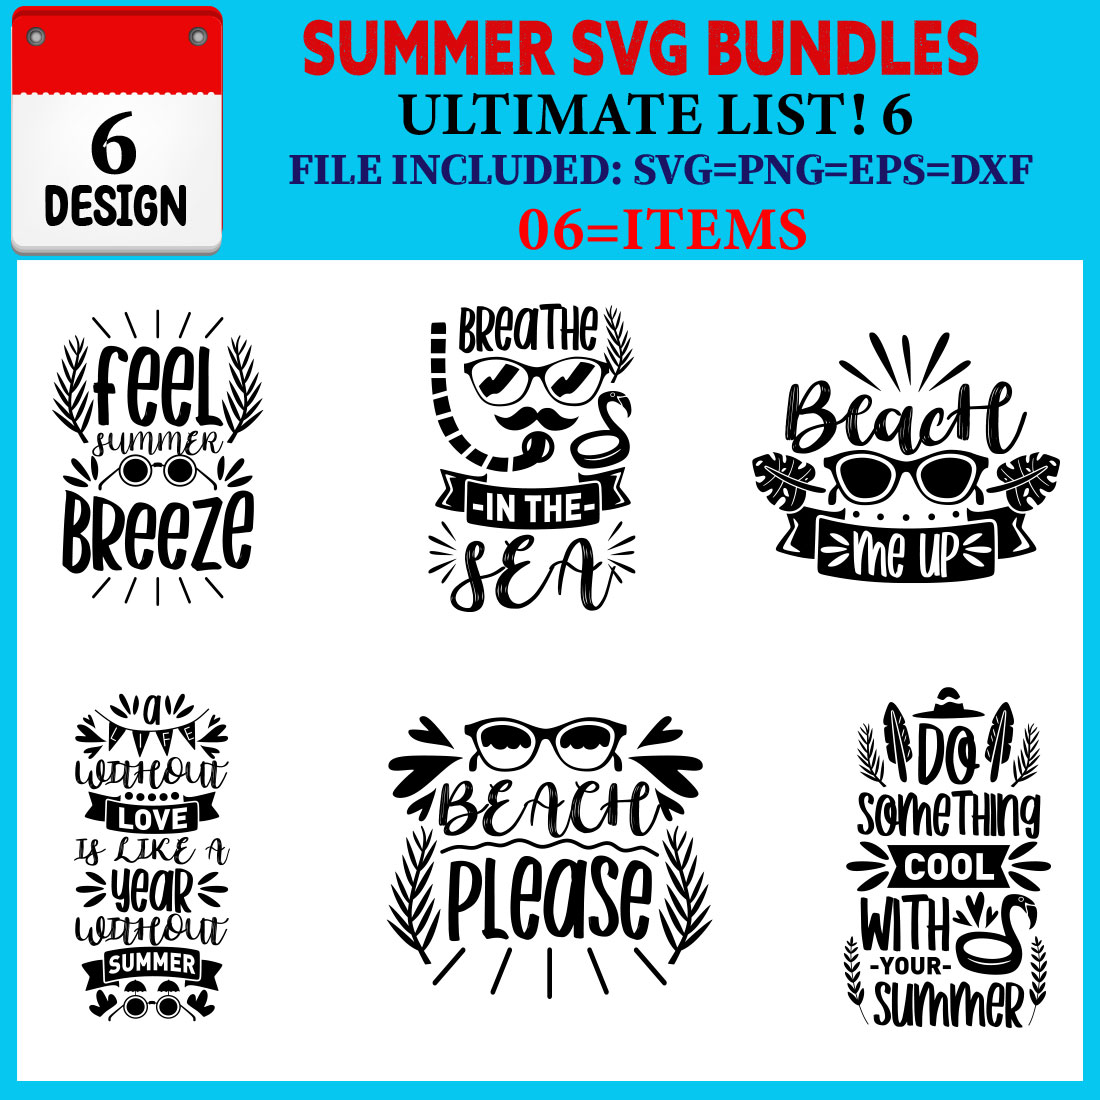 Summer T-shirt Design Bundle Vol-05 cover image.